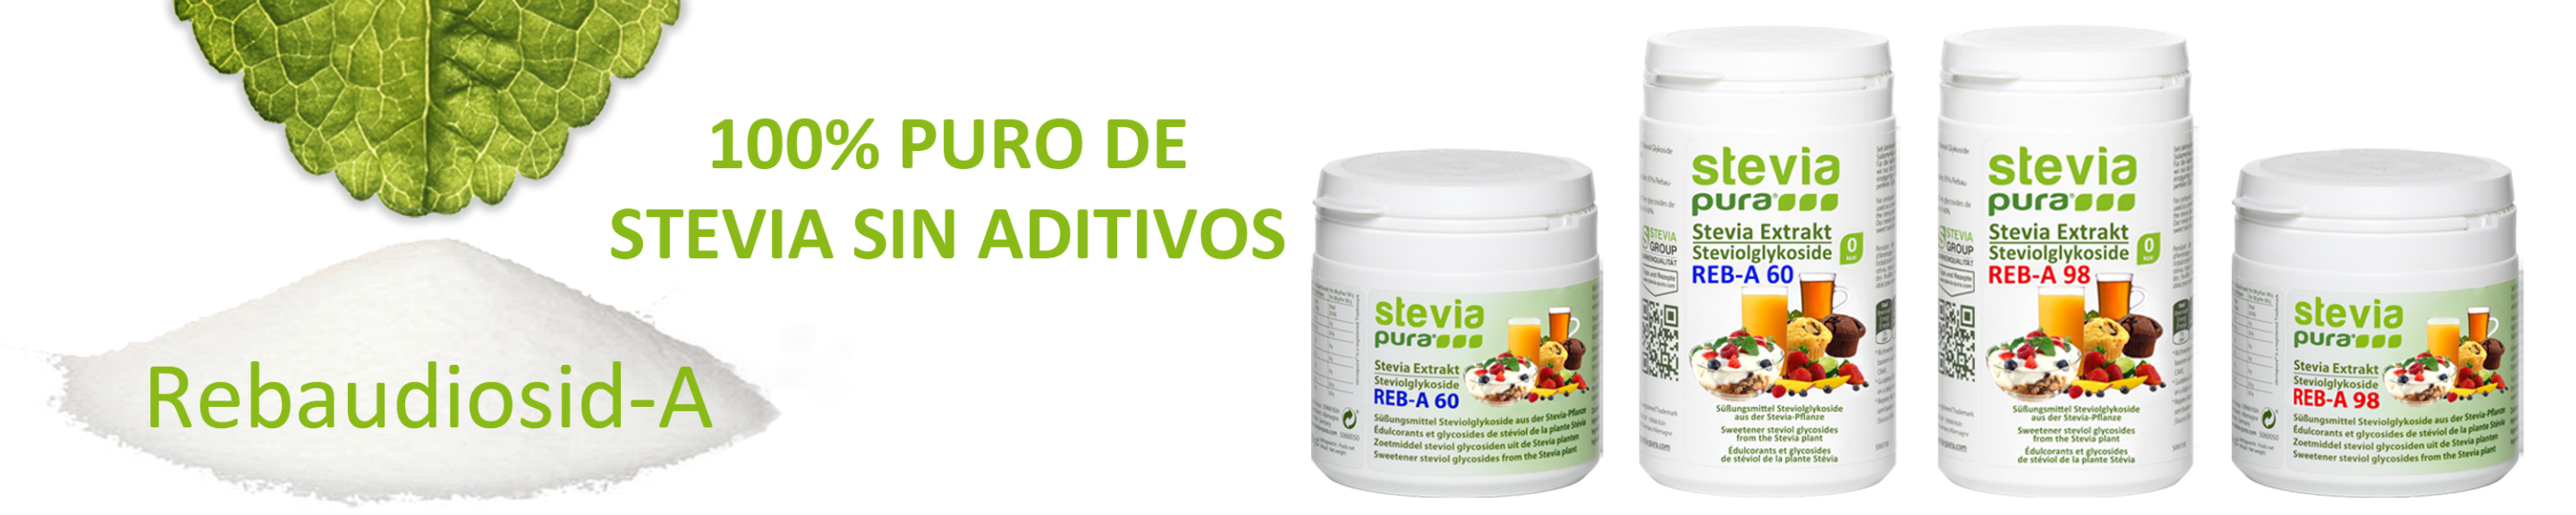 Comprar Stevia 100% pura sin aditivos rebaudiósido A98 %...